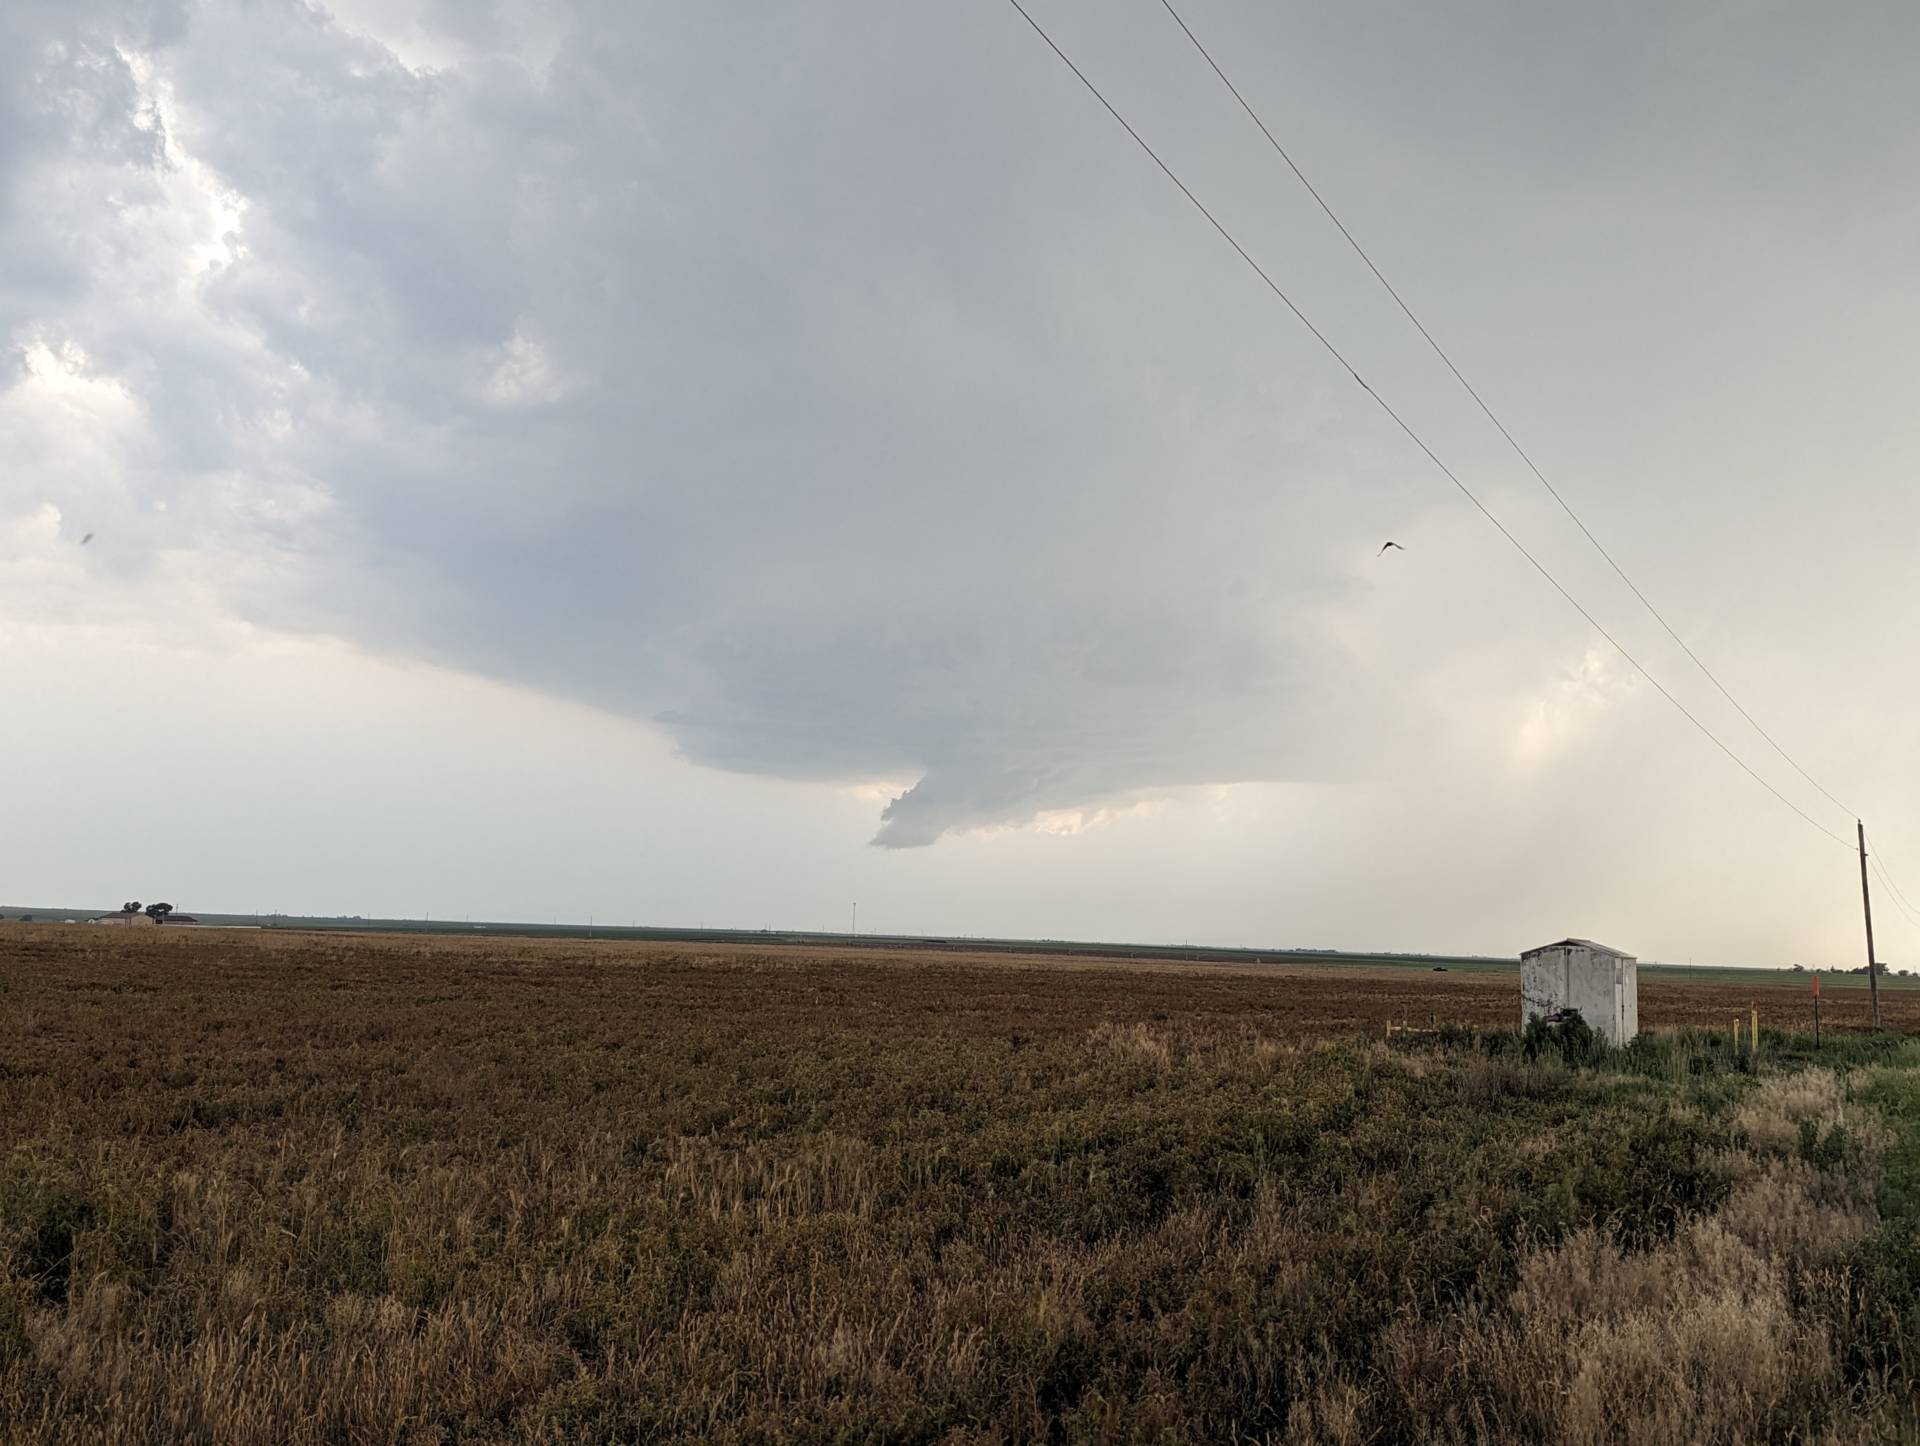 Wall cloud forming near Guymon, Oklahoma. #okwx